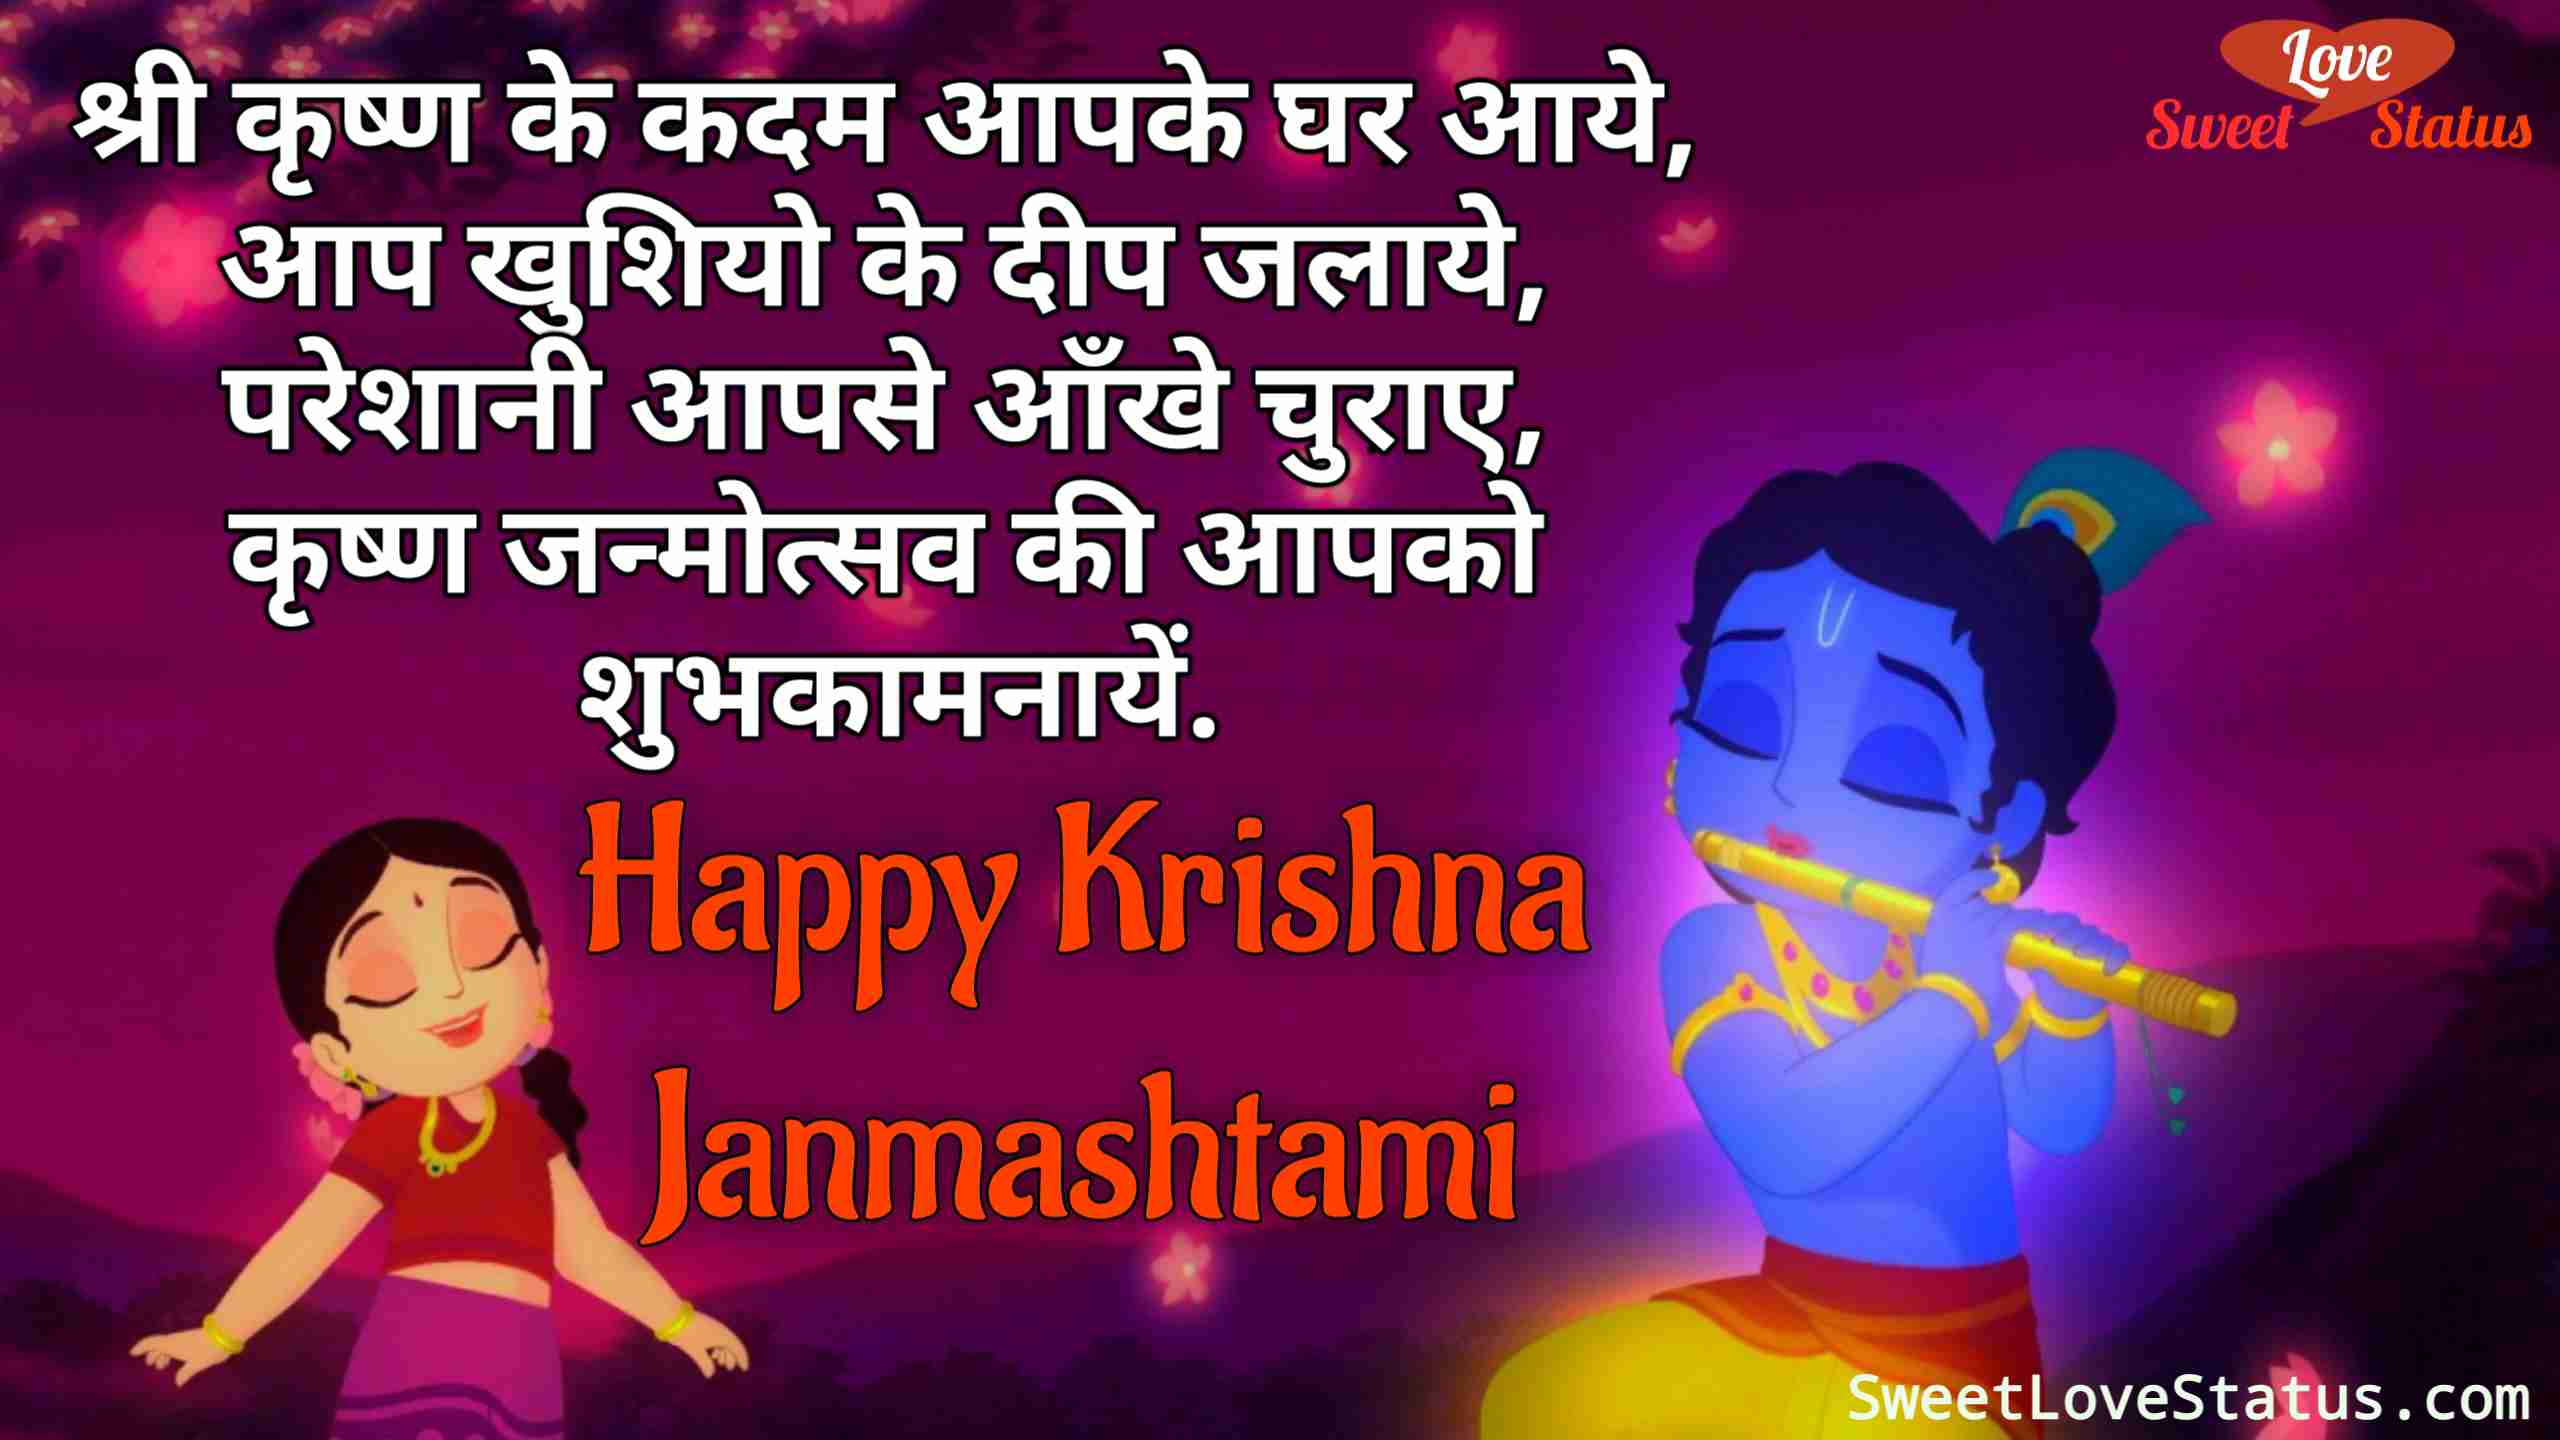 happy janmashtami images, Happy krishna janmashtami images, Happy janmashtami wallpapers, Krishna janmashtami pictures,